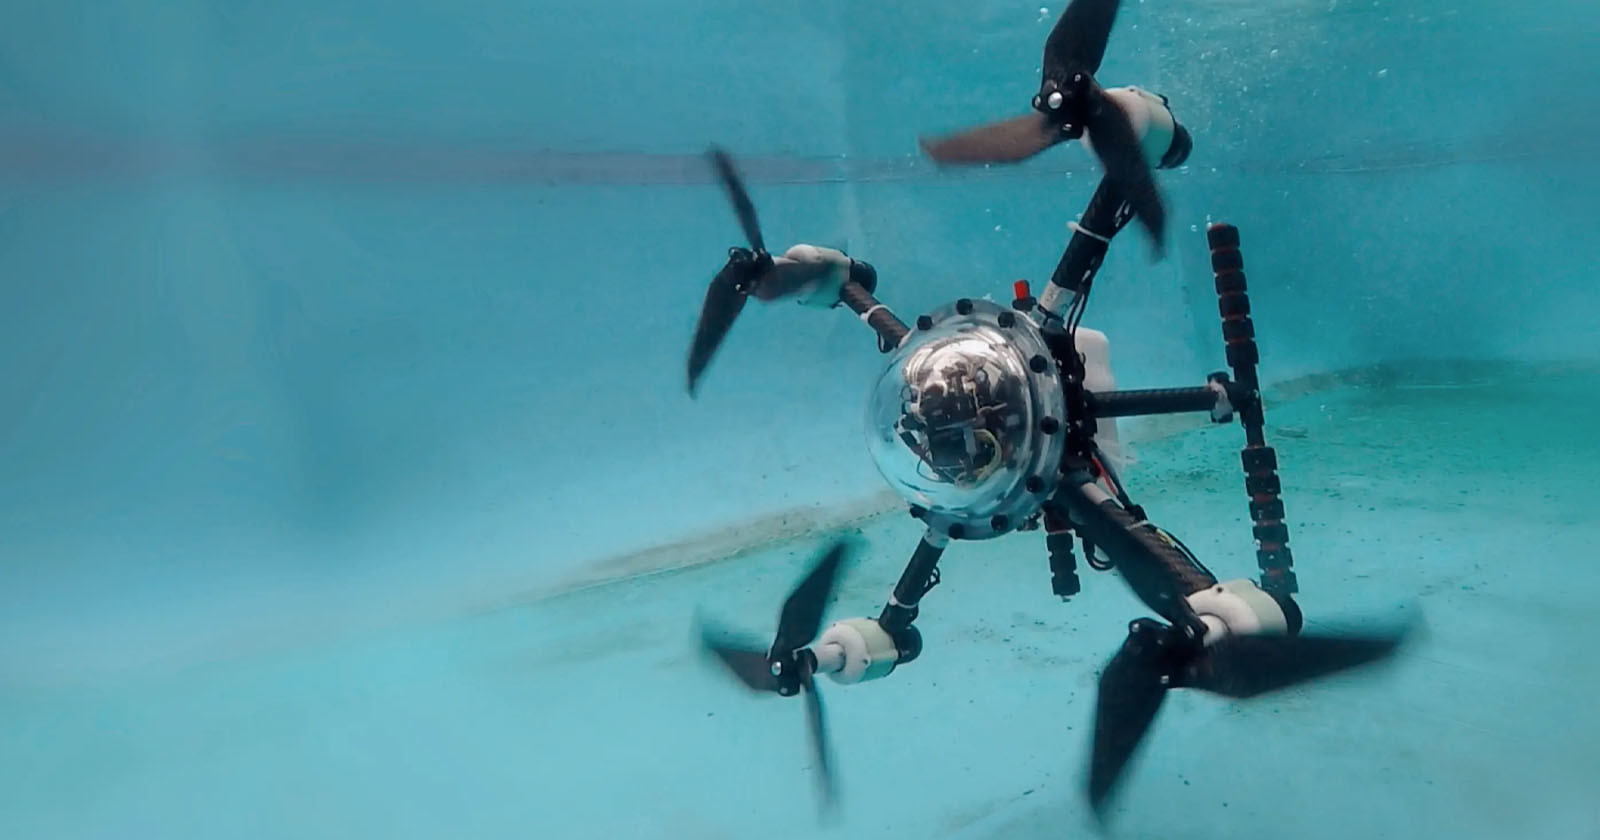  experimental drone can fly through air 